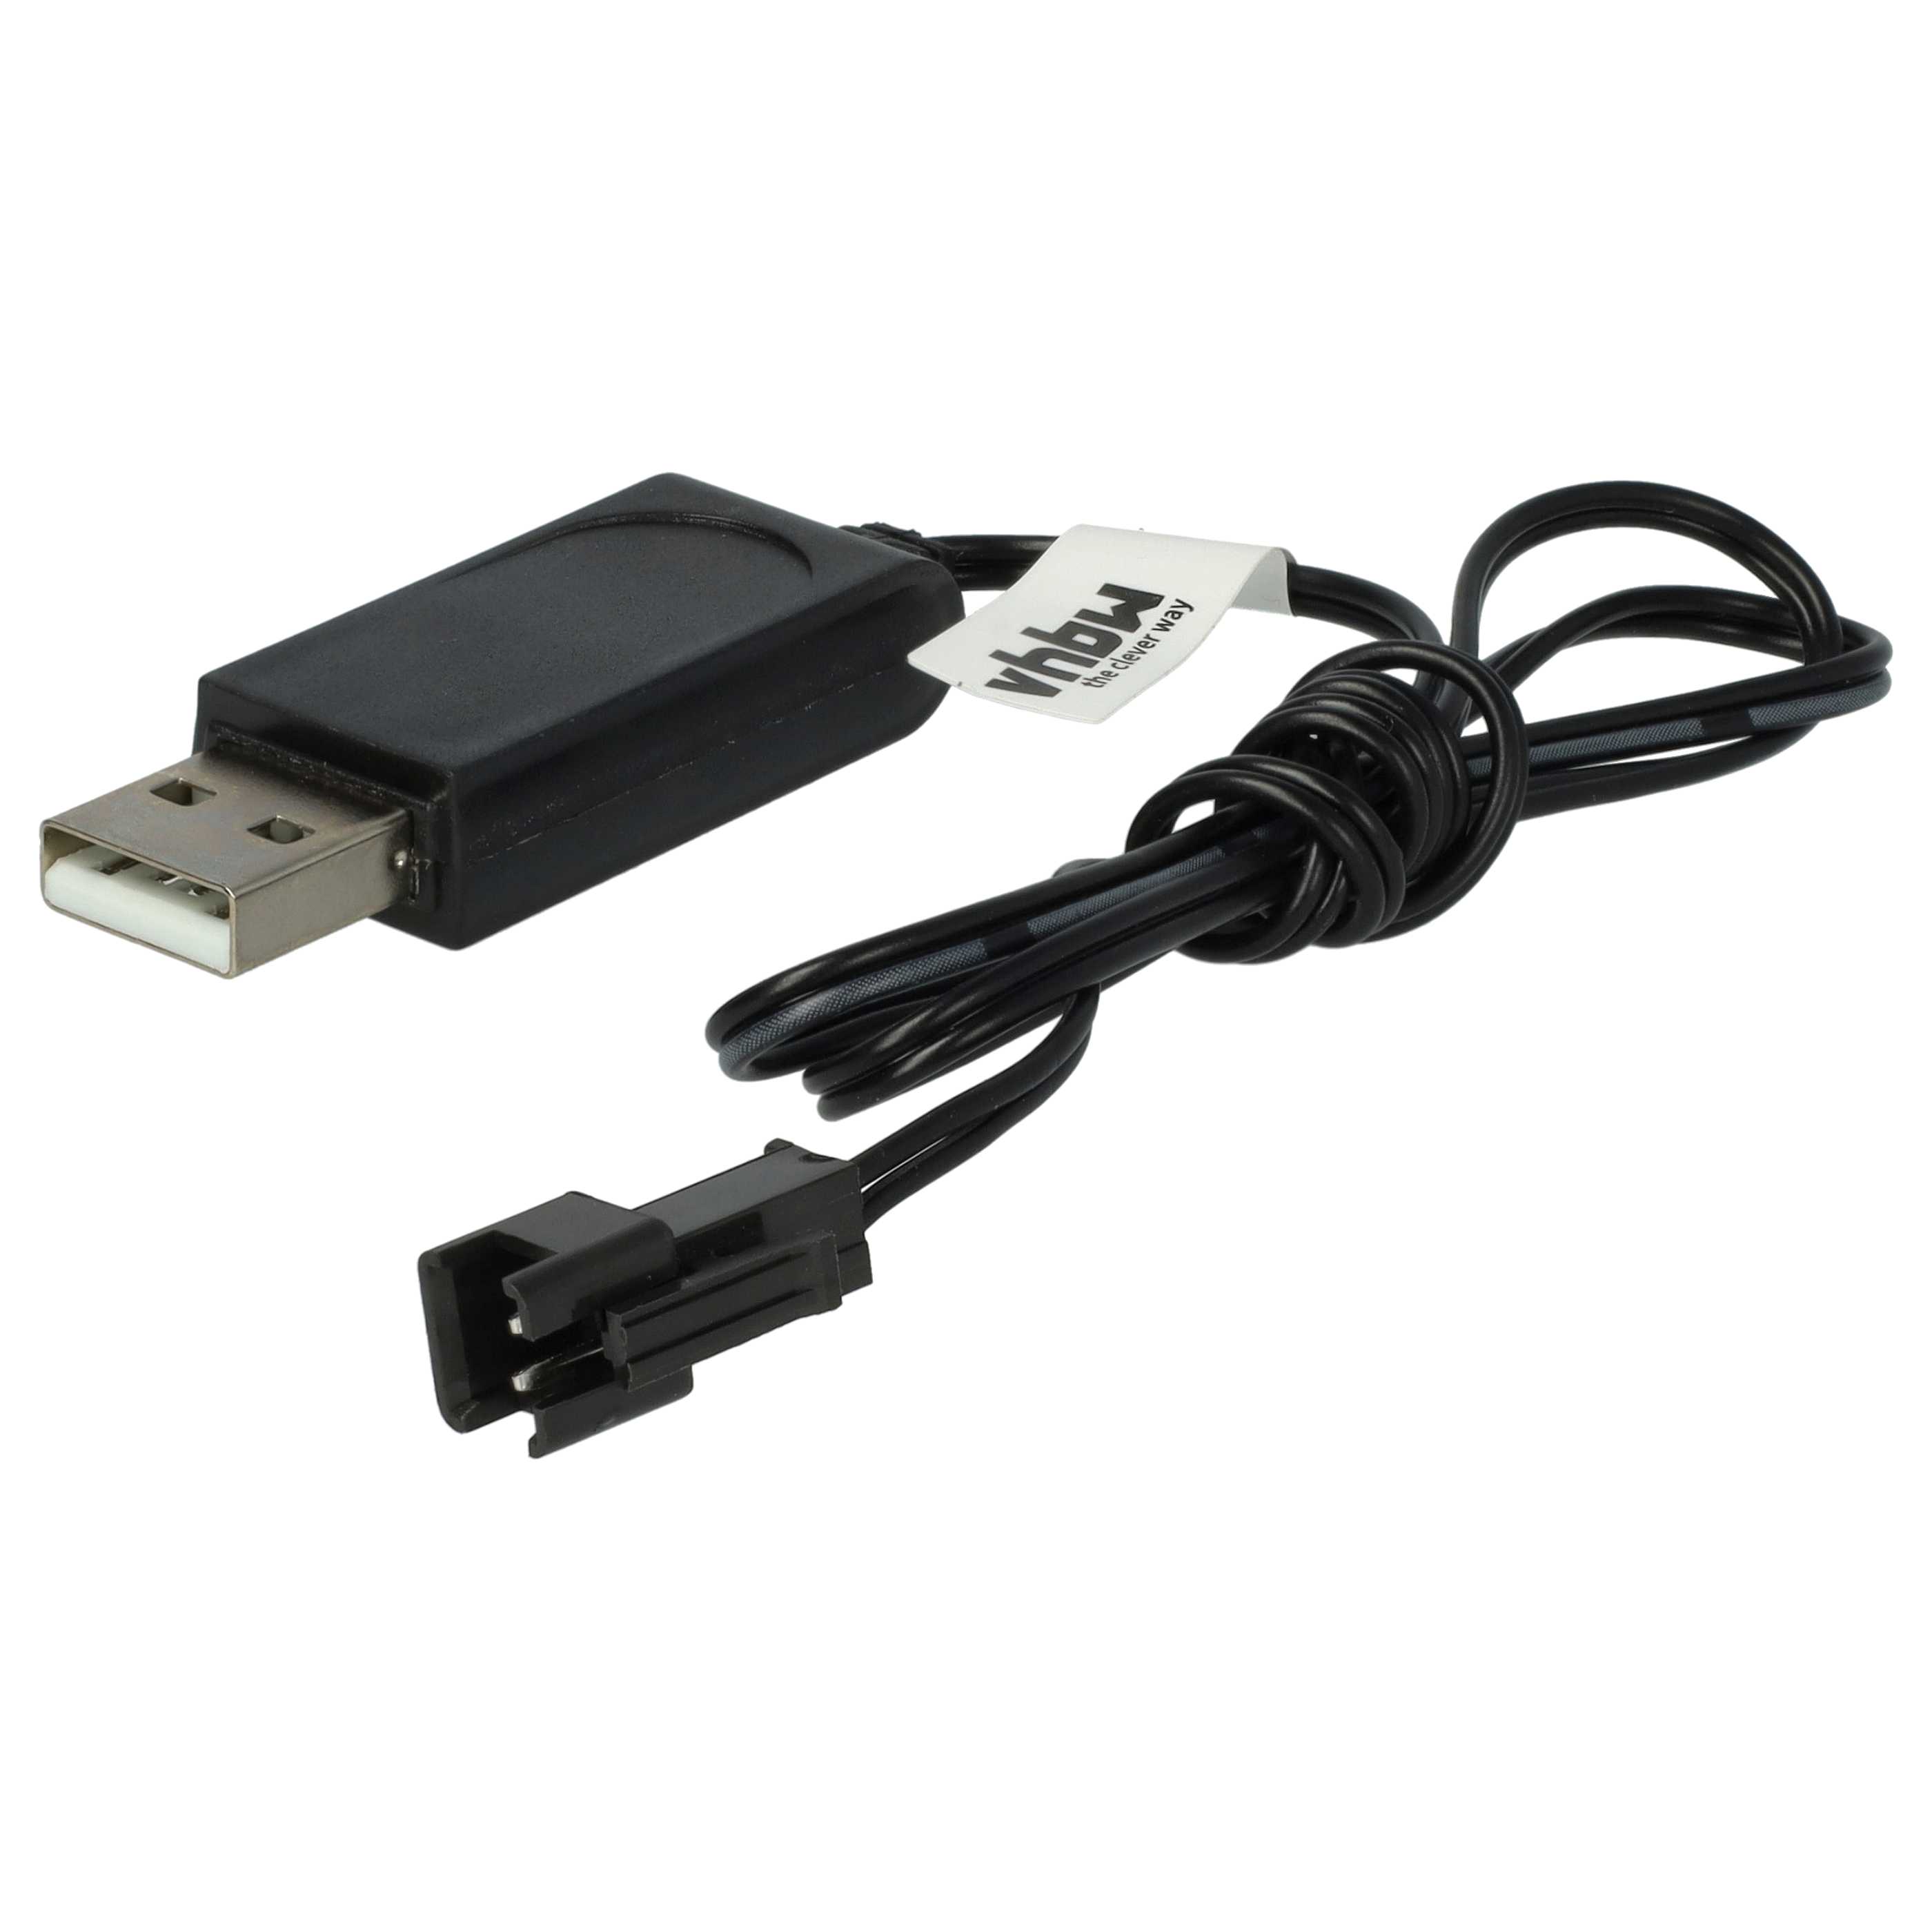 USB-Ladekabel passend für RC-Akkus mit SM-2P-Anschluss, RC-Modellbau Akkupacks - 60cm 6V